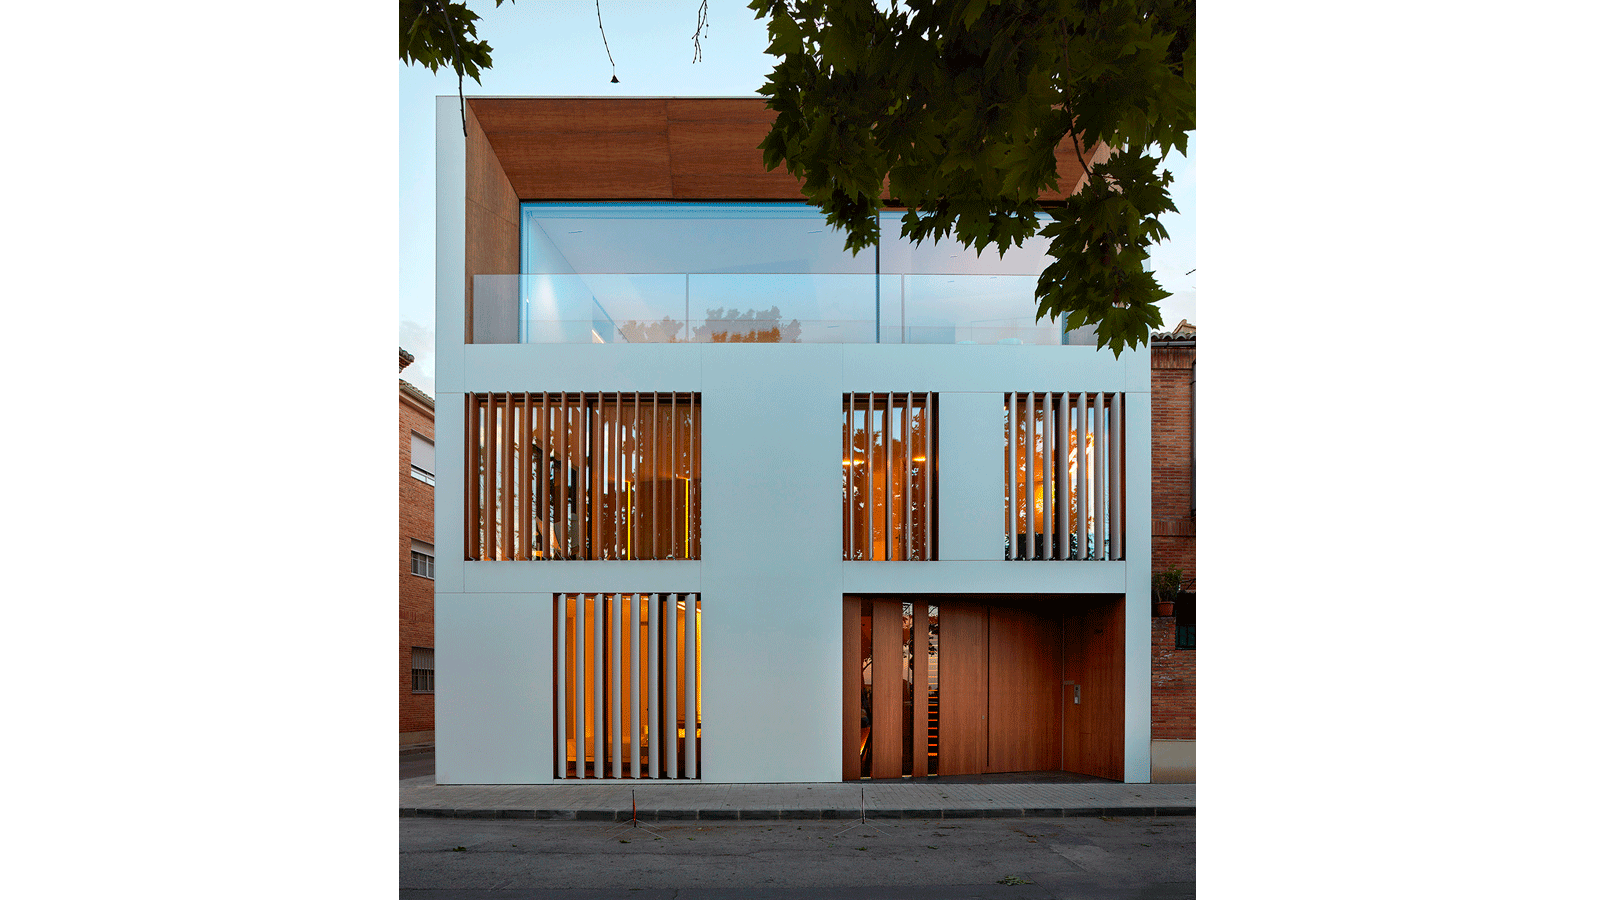 PORCELANOSA Group Projects: Minimal geometry in the ‘Casa en la huerta’ by Ramón Esteve Estudio